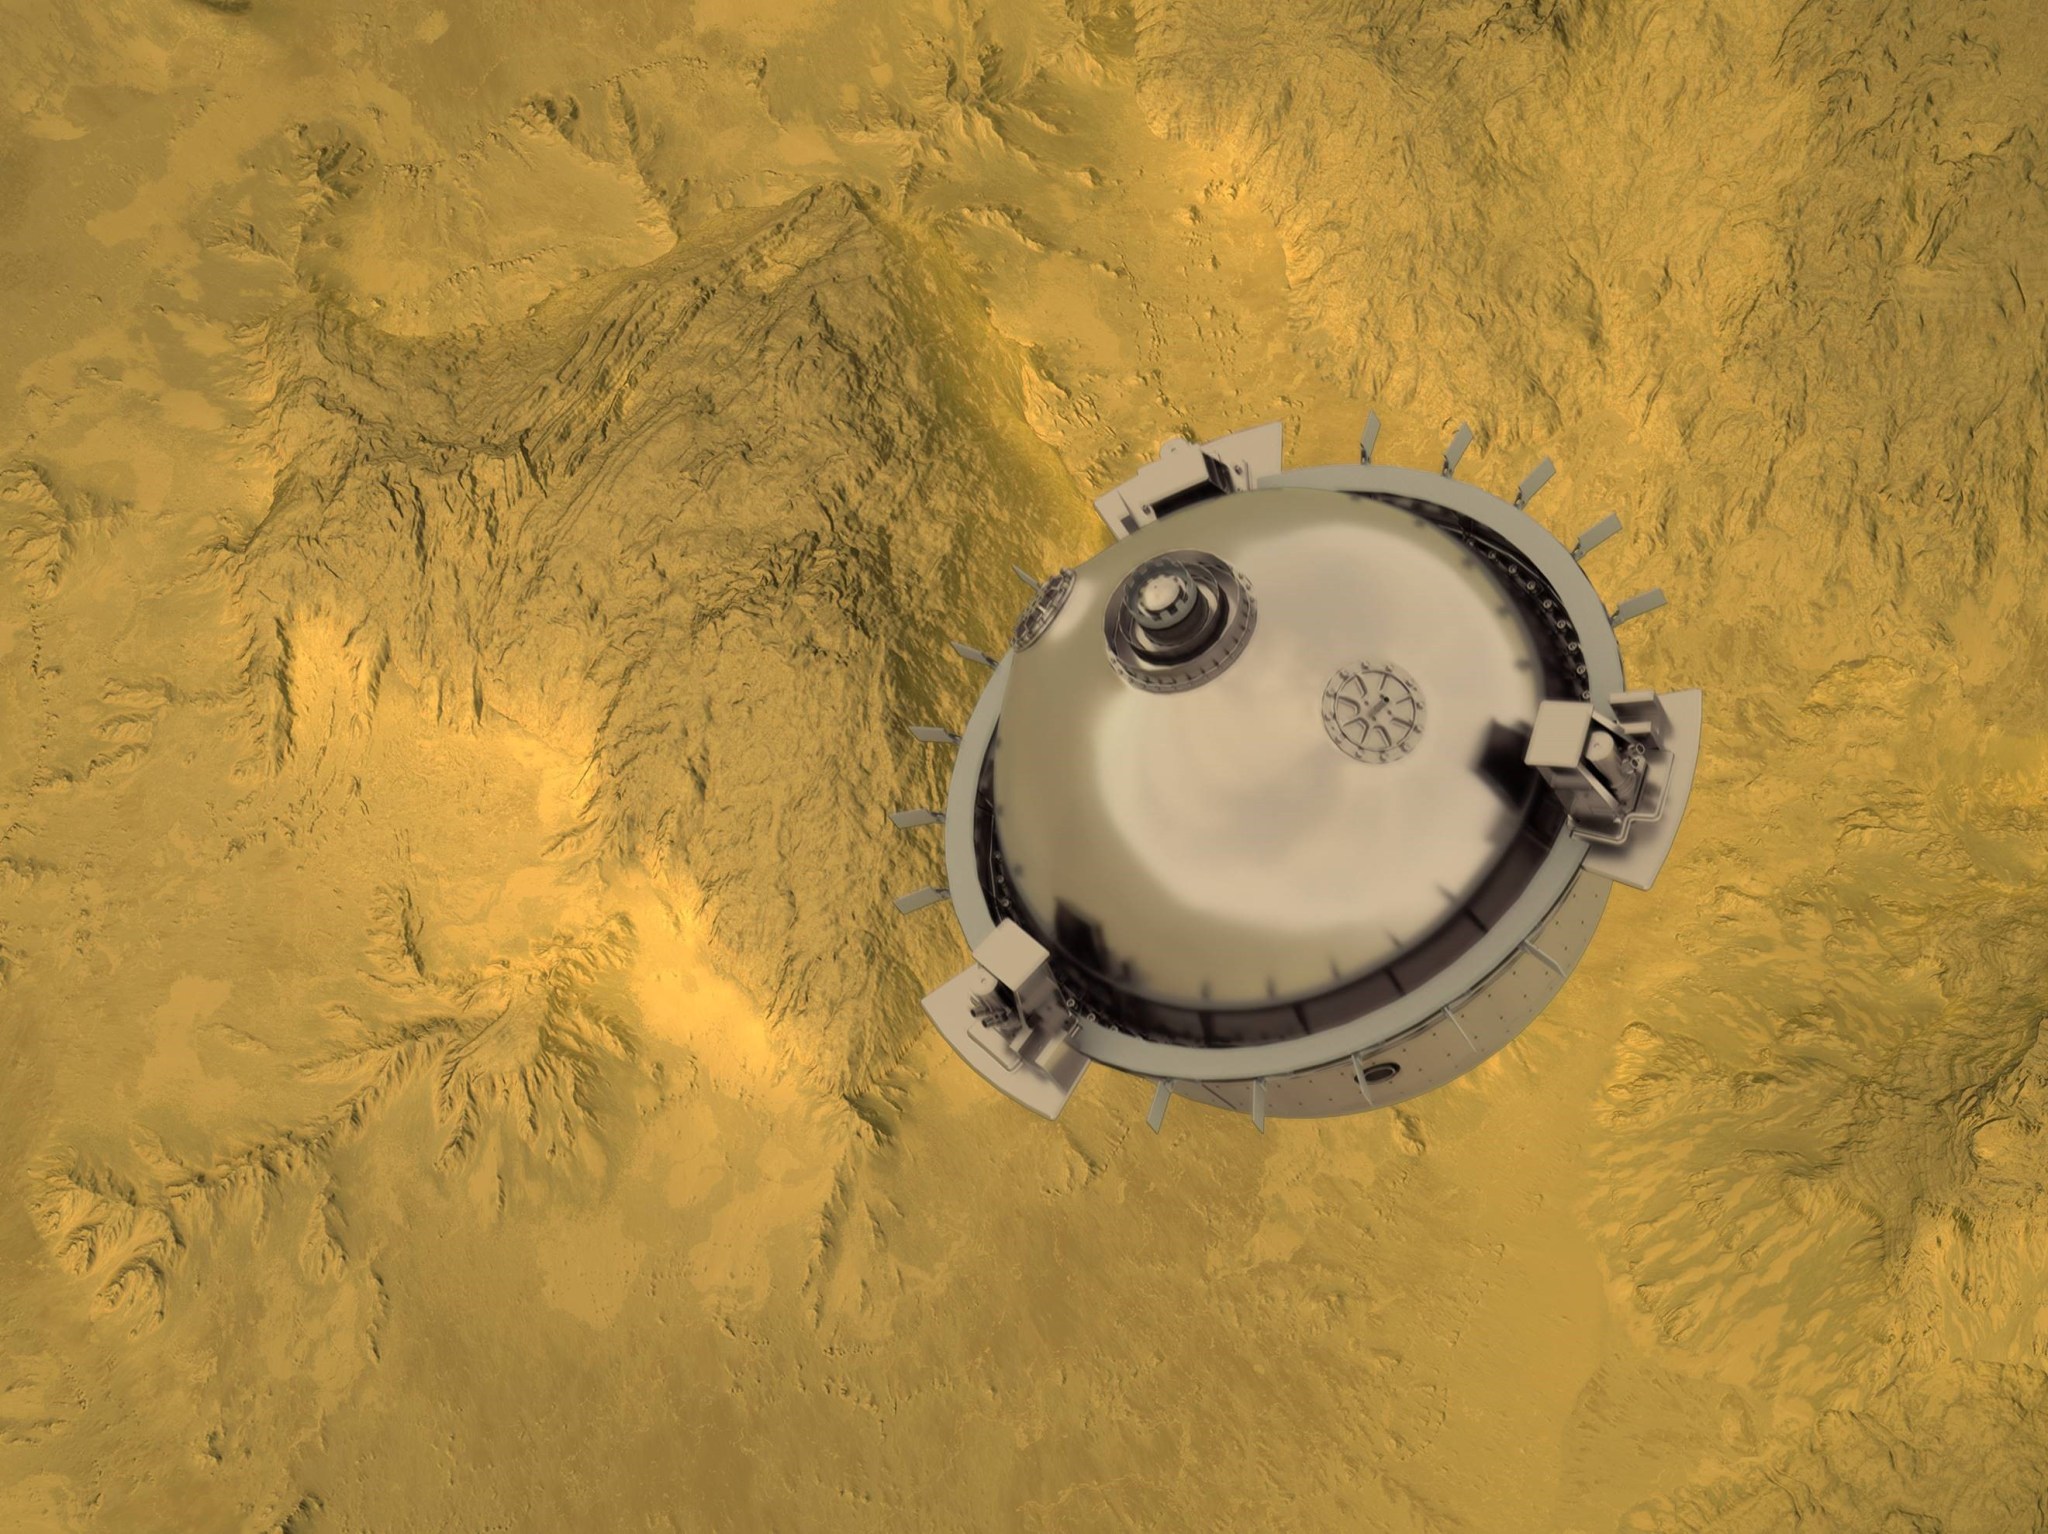 DAVINCI Descent Sphere above Venus